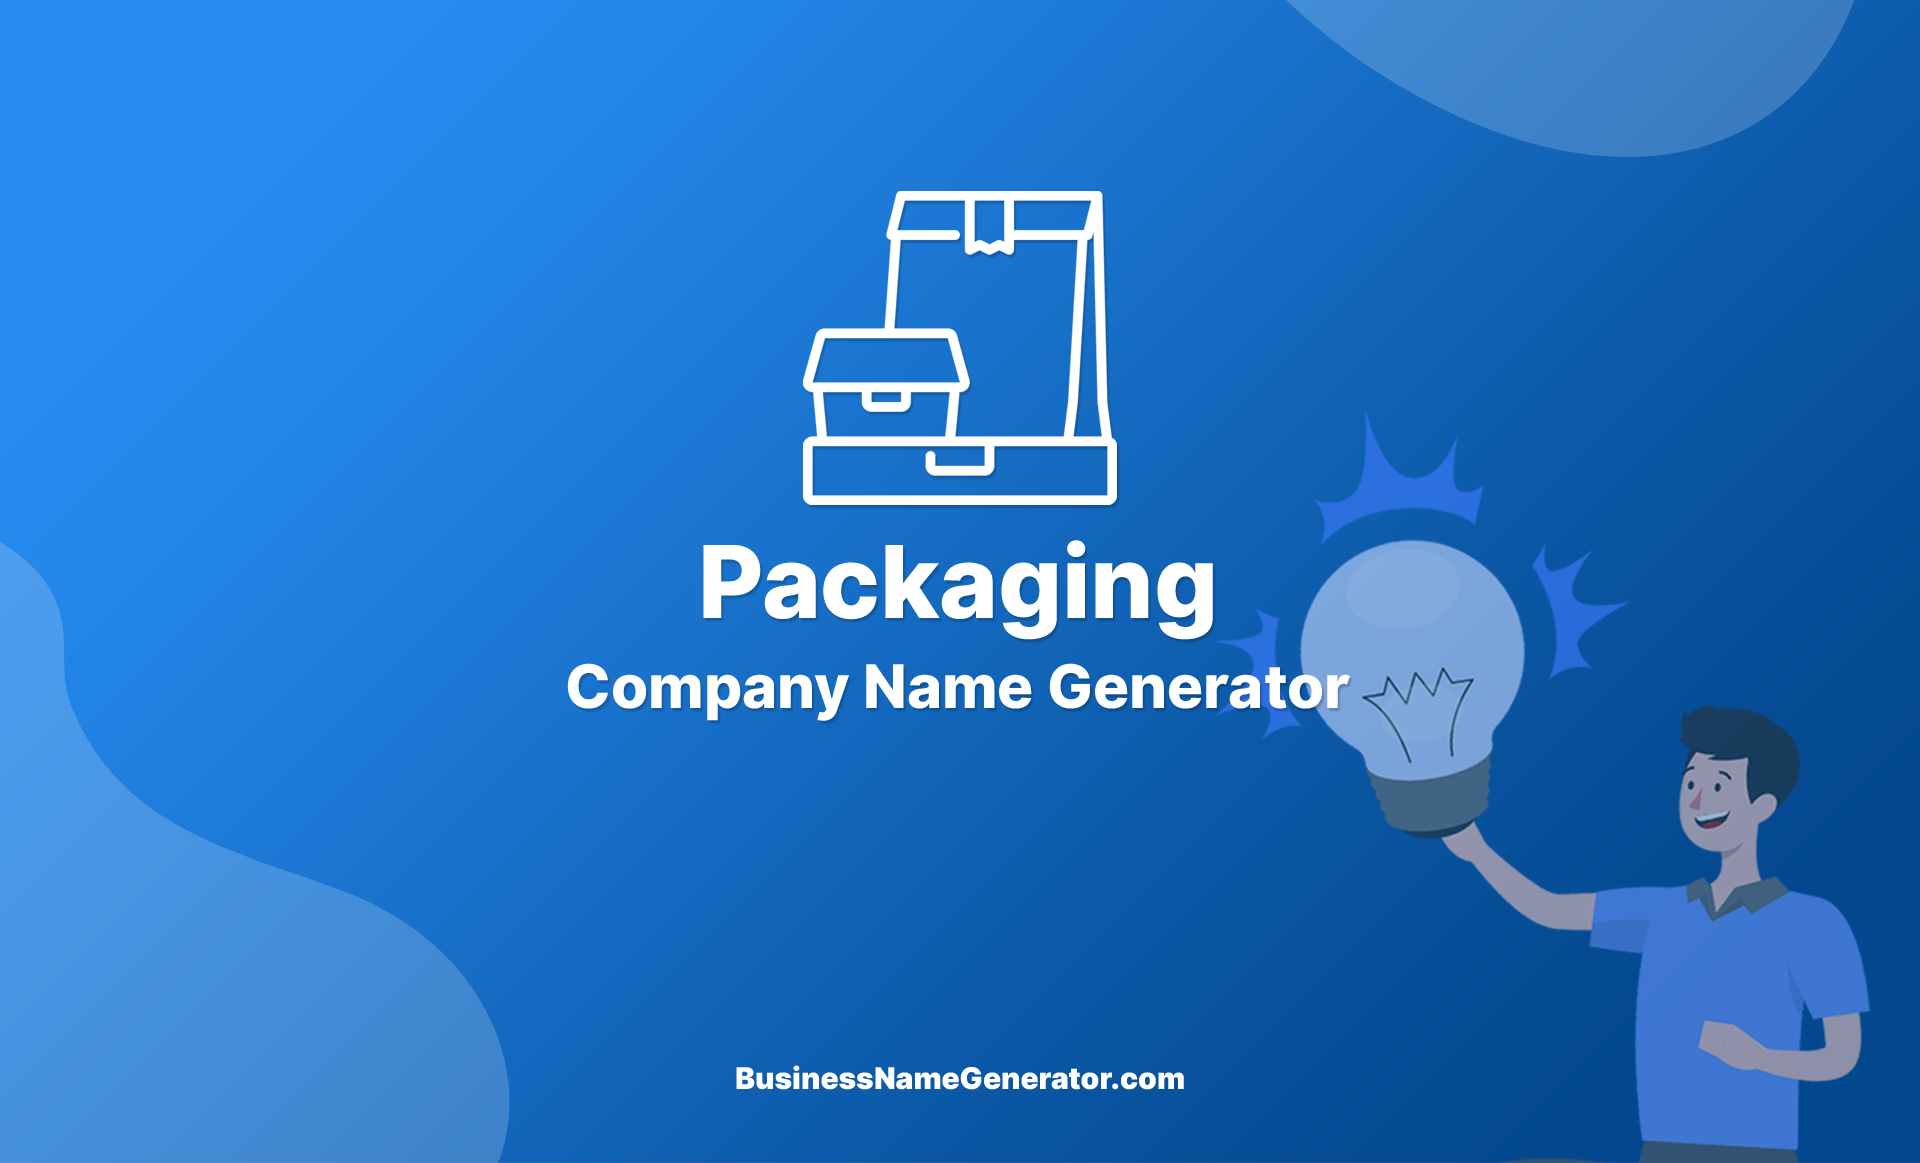 Packaging Company Name Generator